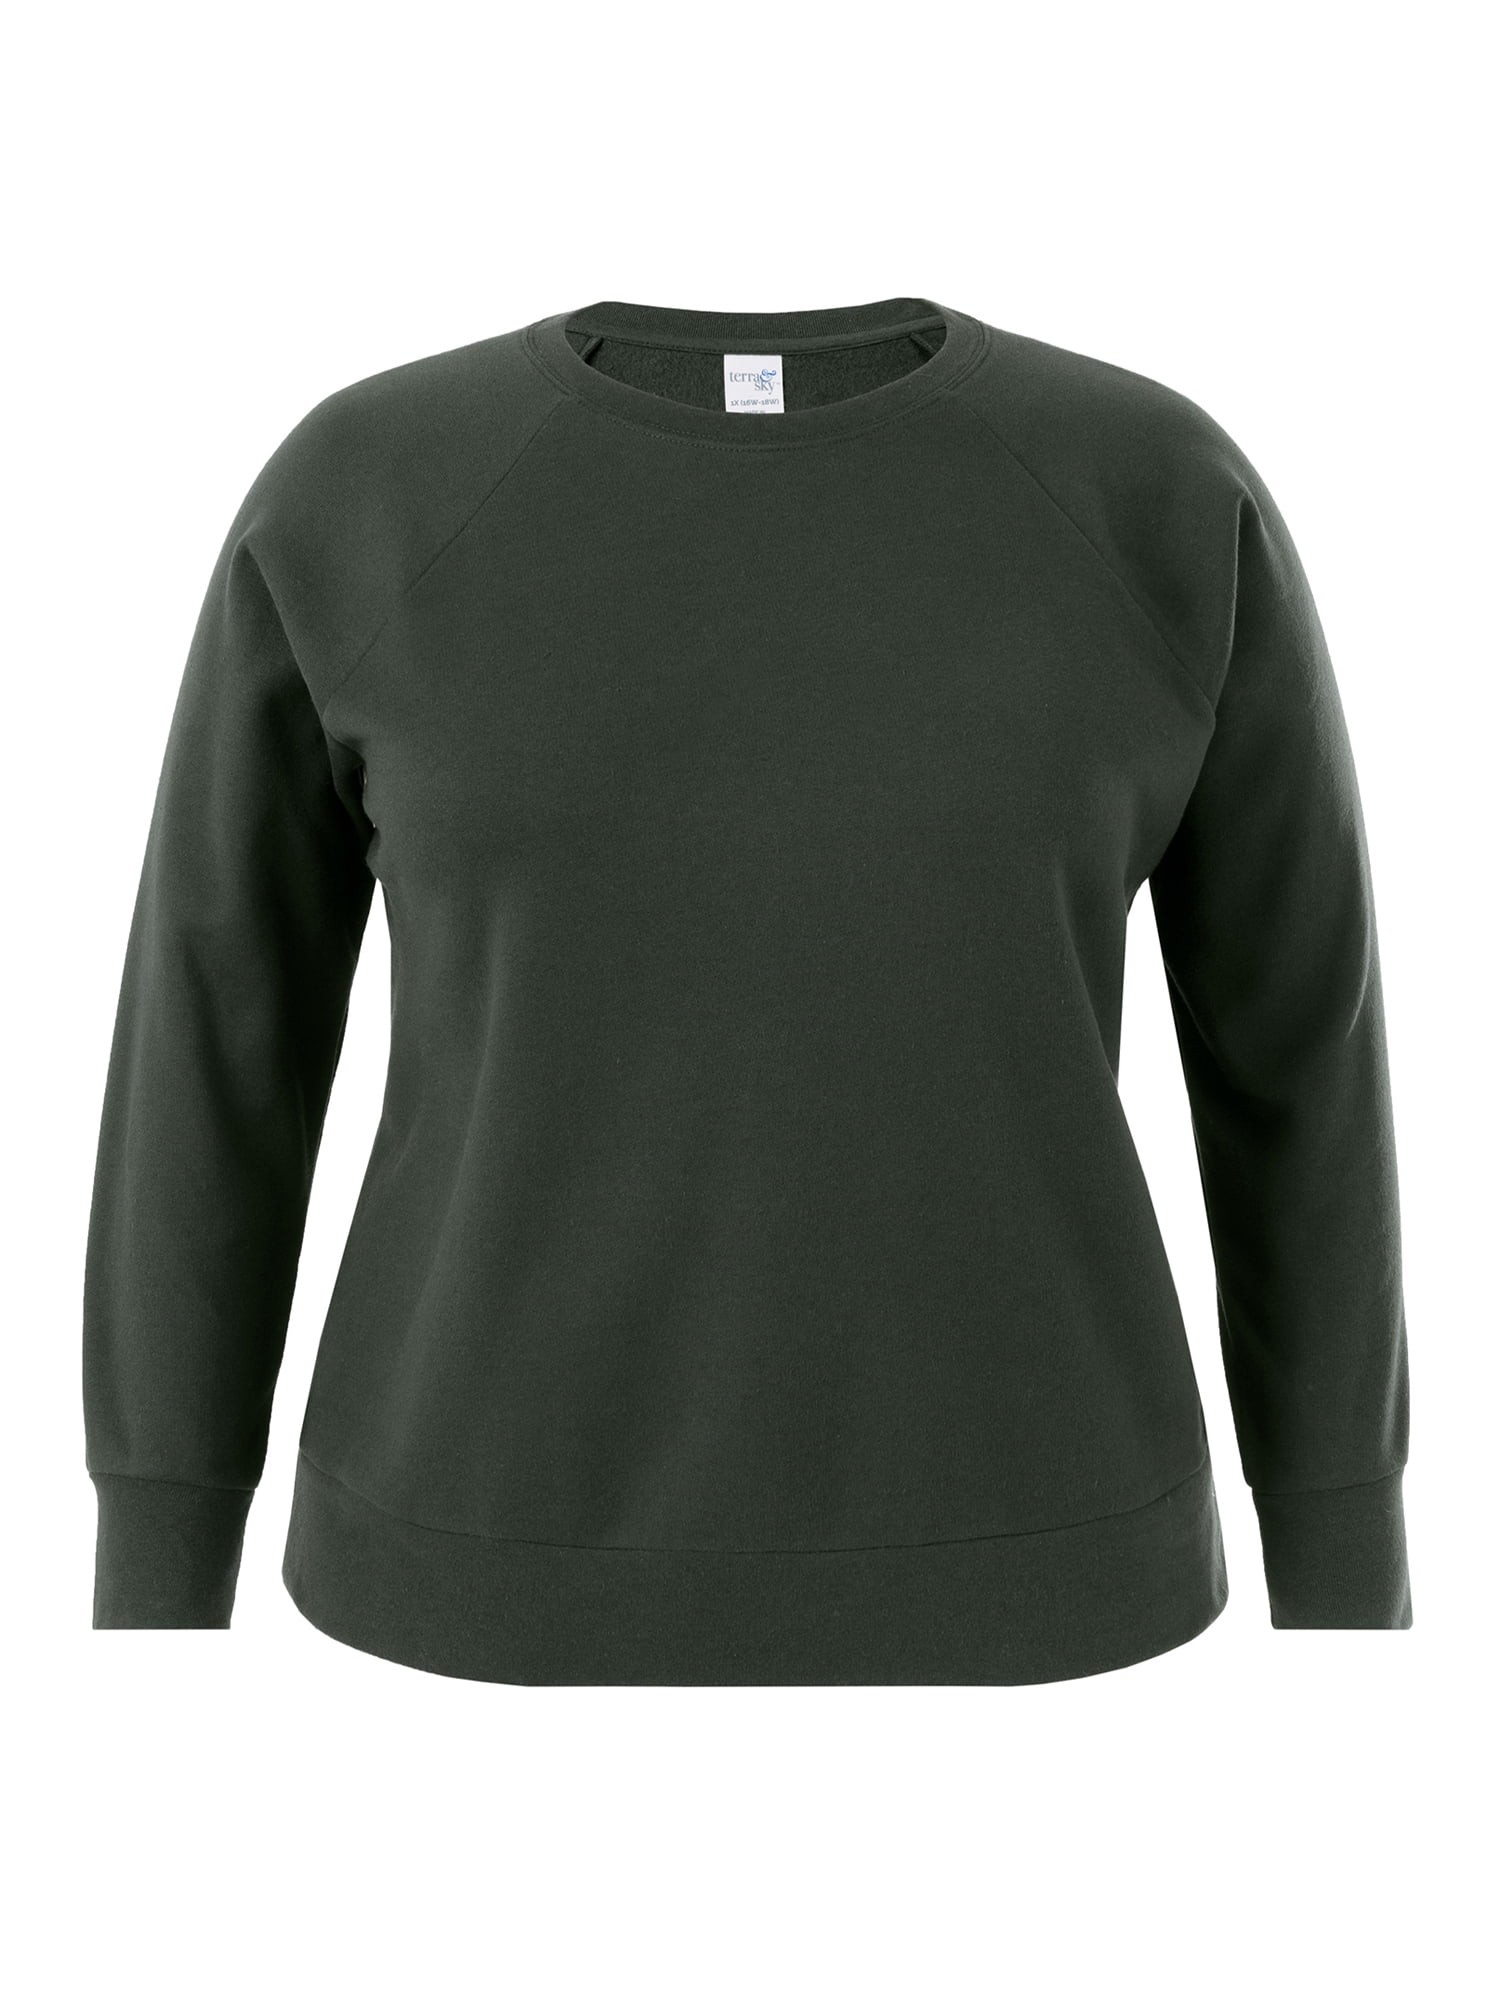 Terra & Sky Women's Plus Size Fleece Sweatshirt, Sizes 0X-4X